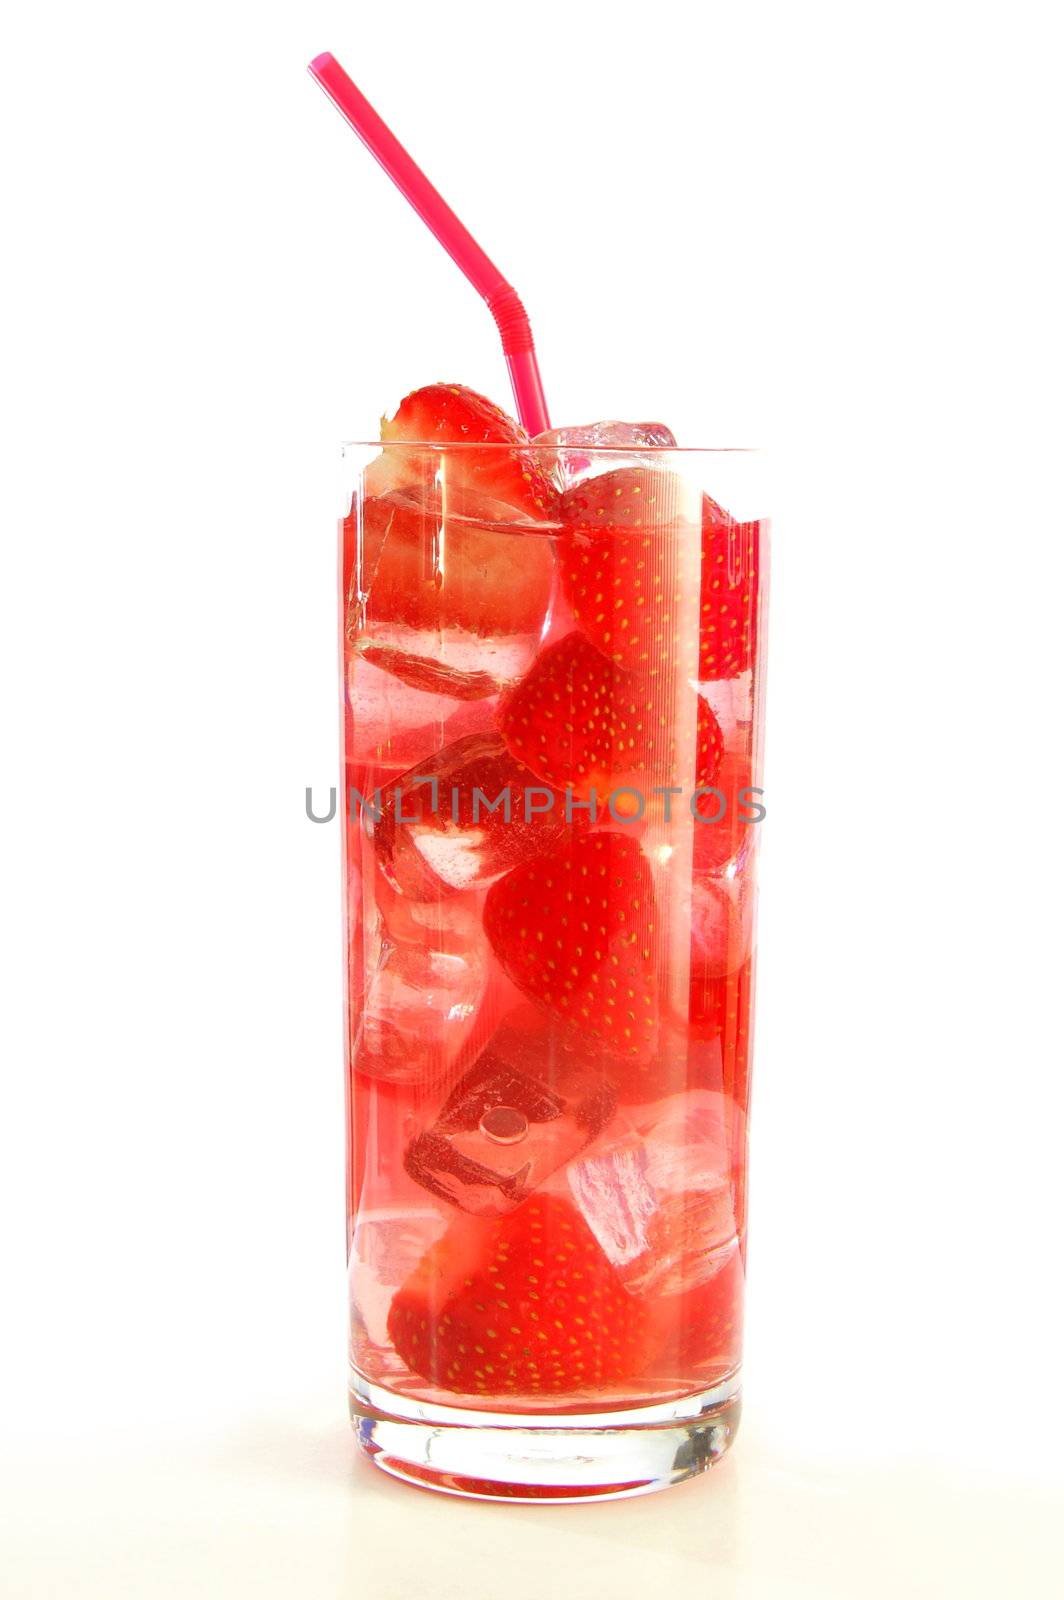 strawberry fruit juice by gunnar3000